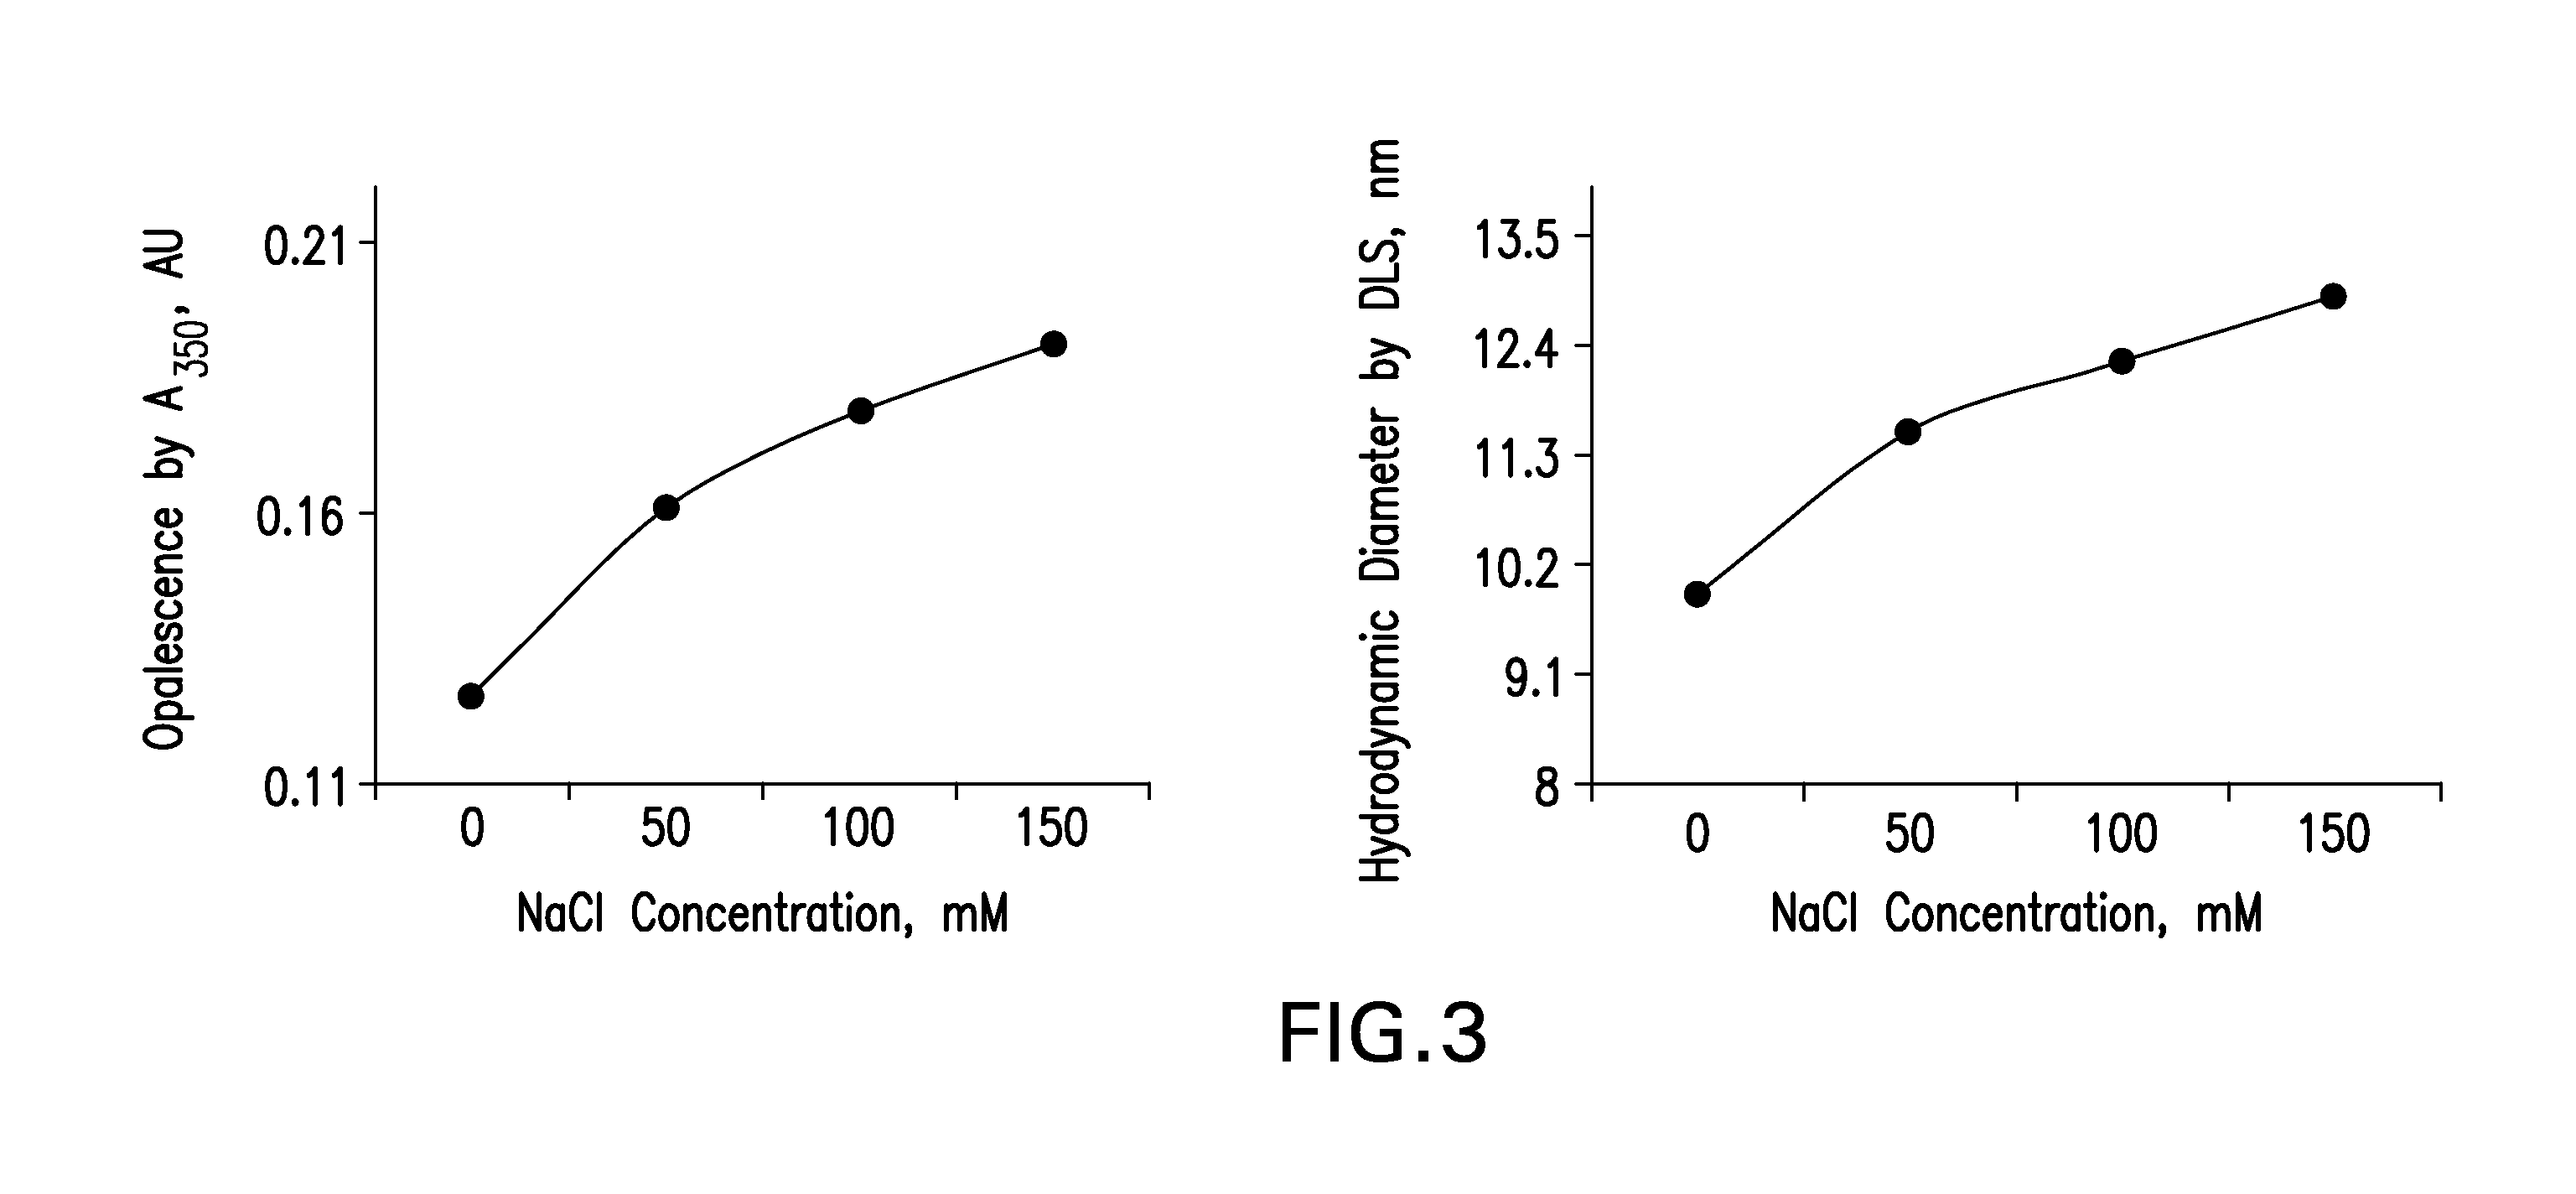 Liquid formulations for an Anti-TNF alpha antibody